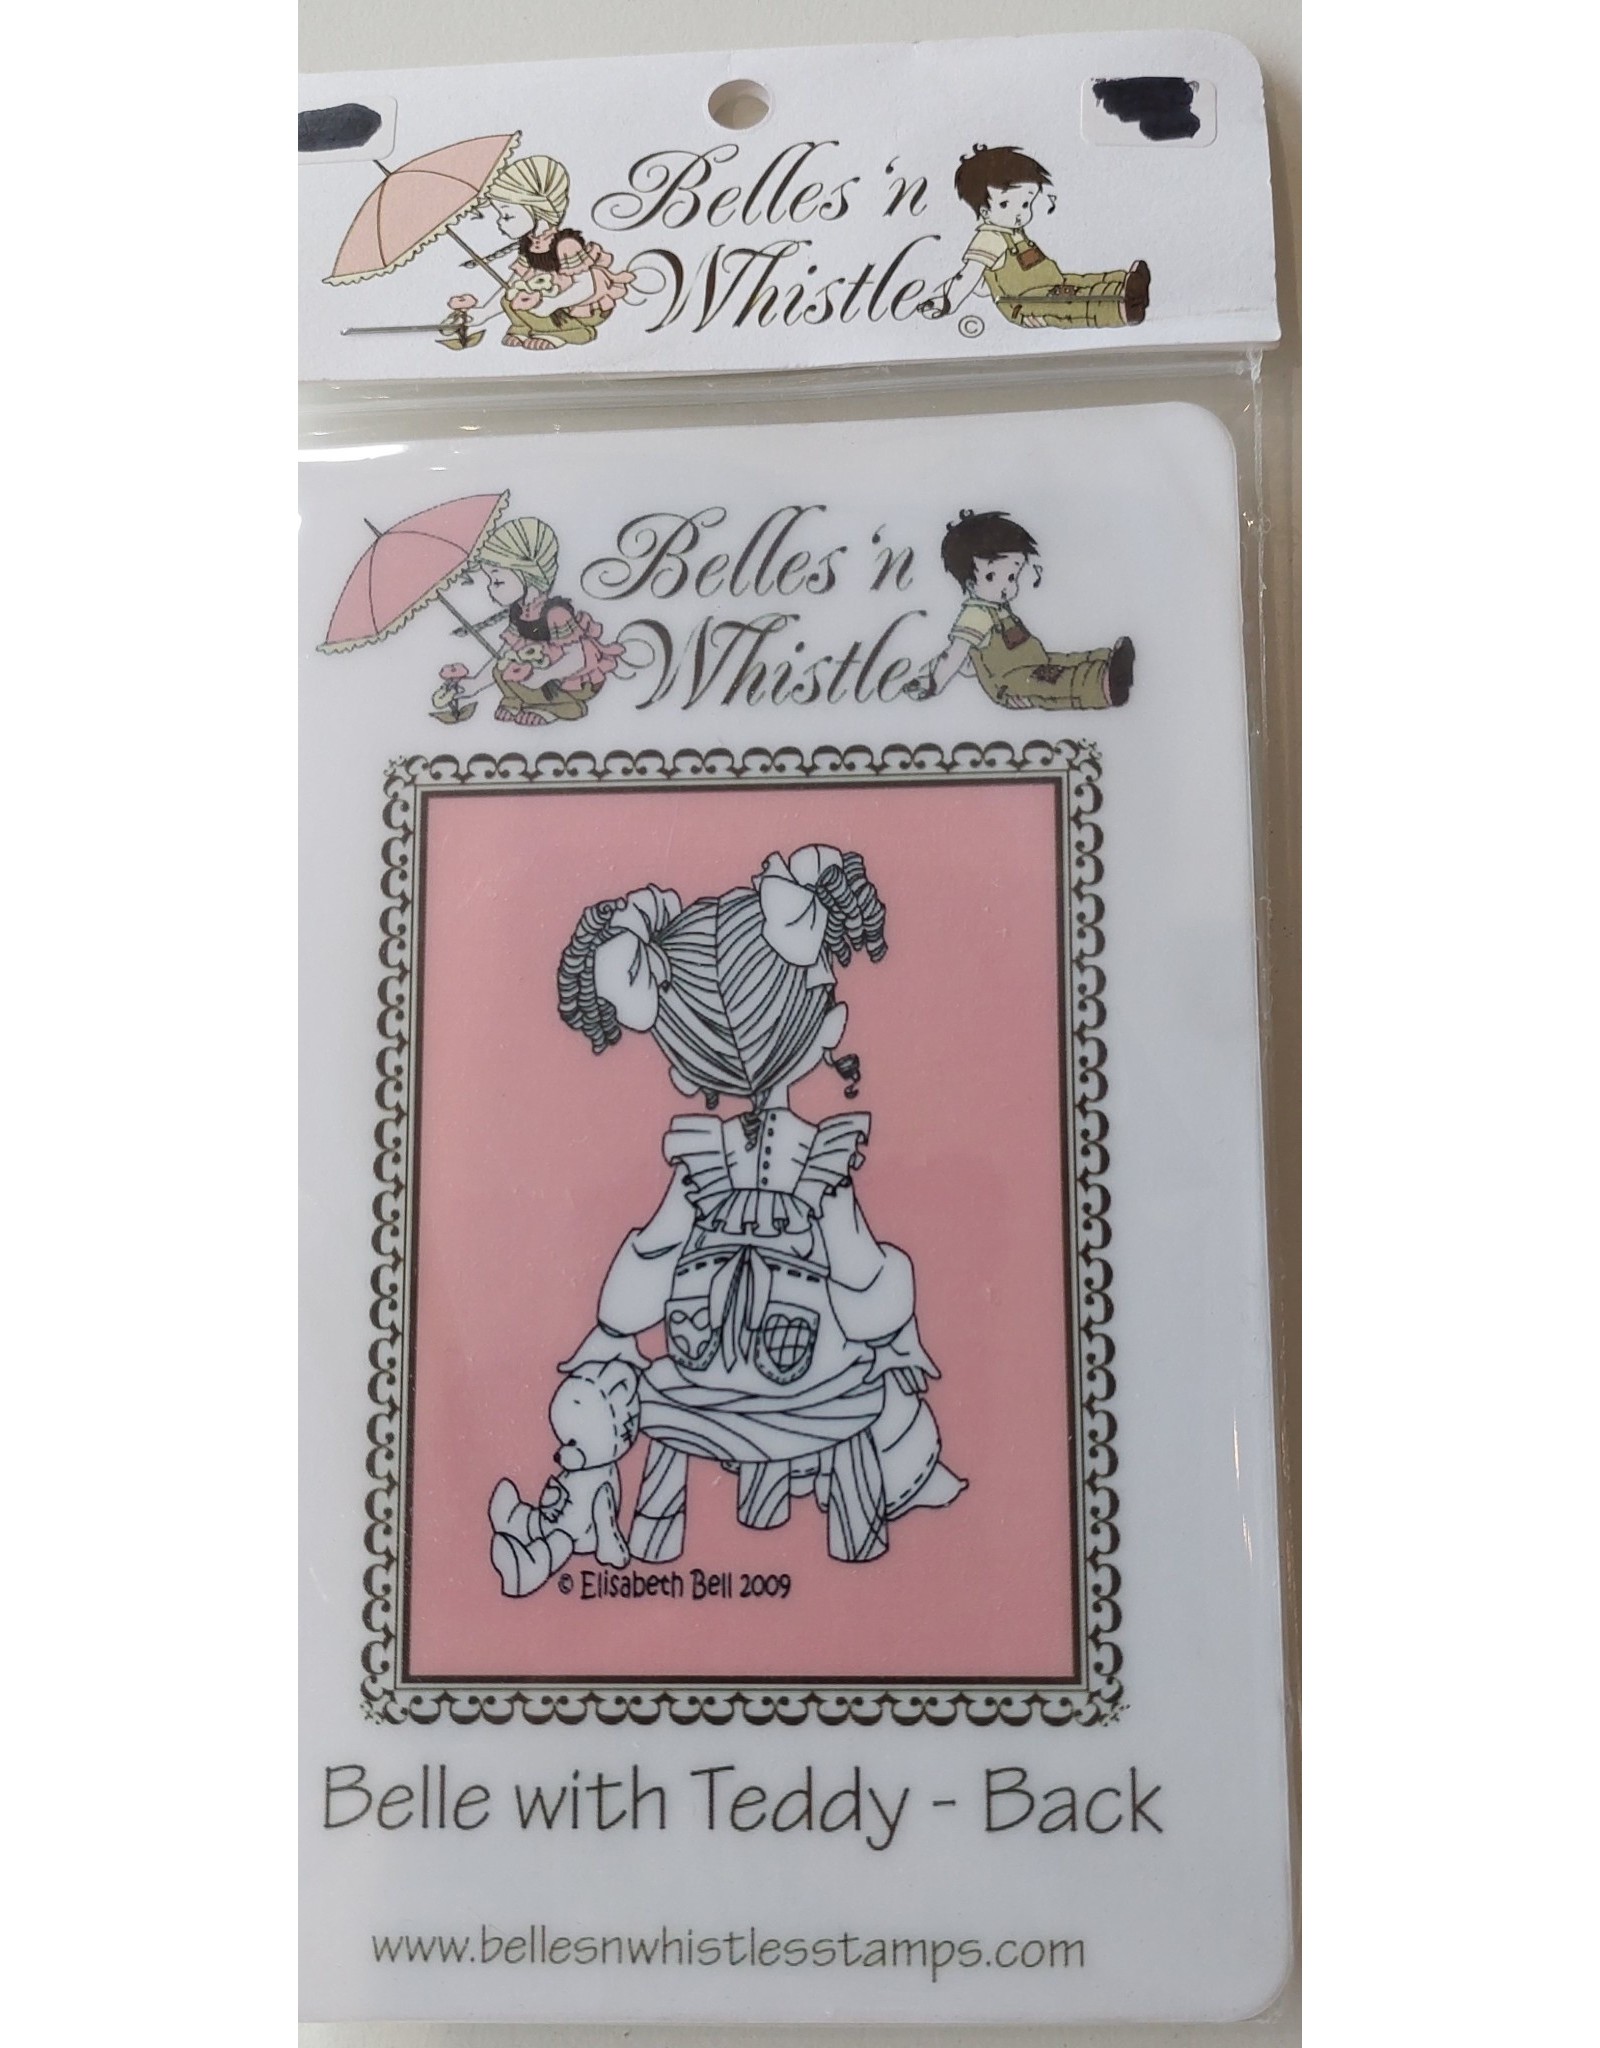 Belles 'n Whistless stamps Belles 'n Wisstles mounted Rubberstamp Belle with Teddy -Back B06